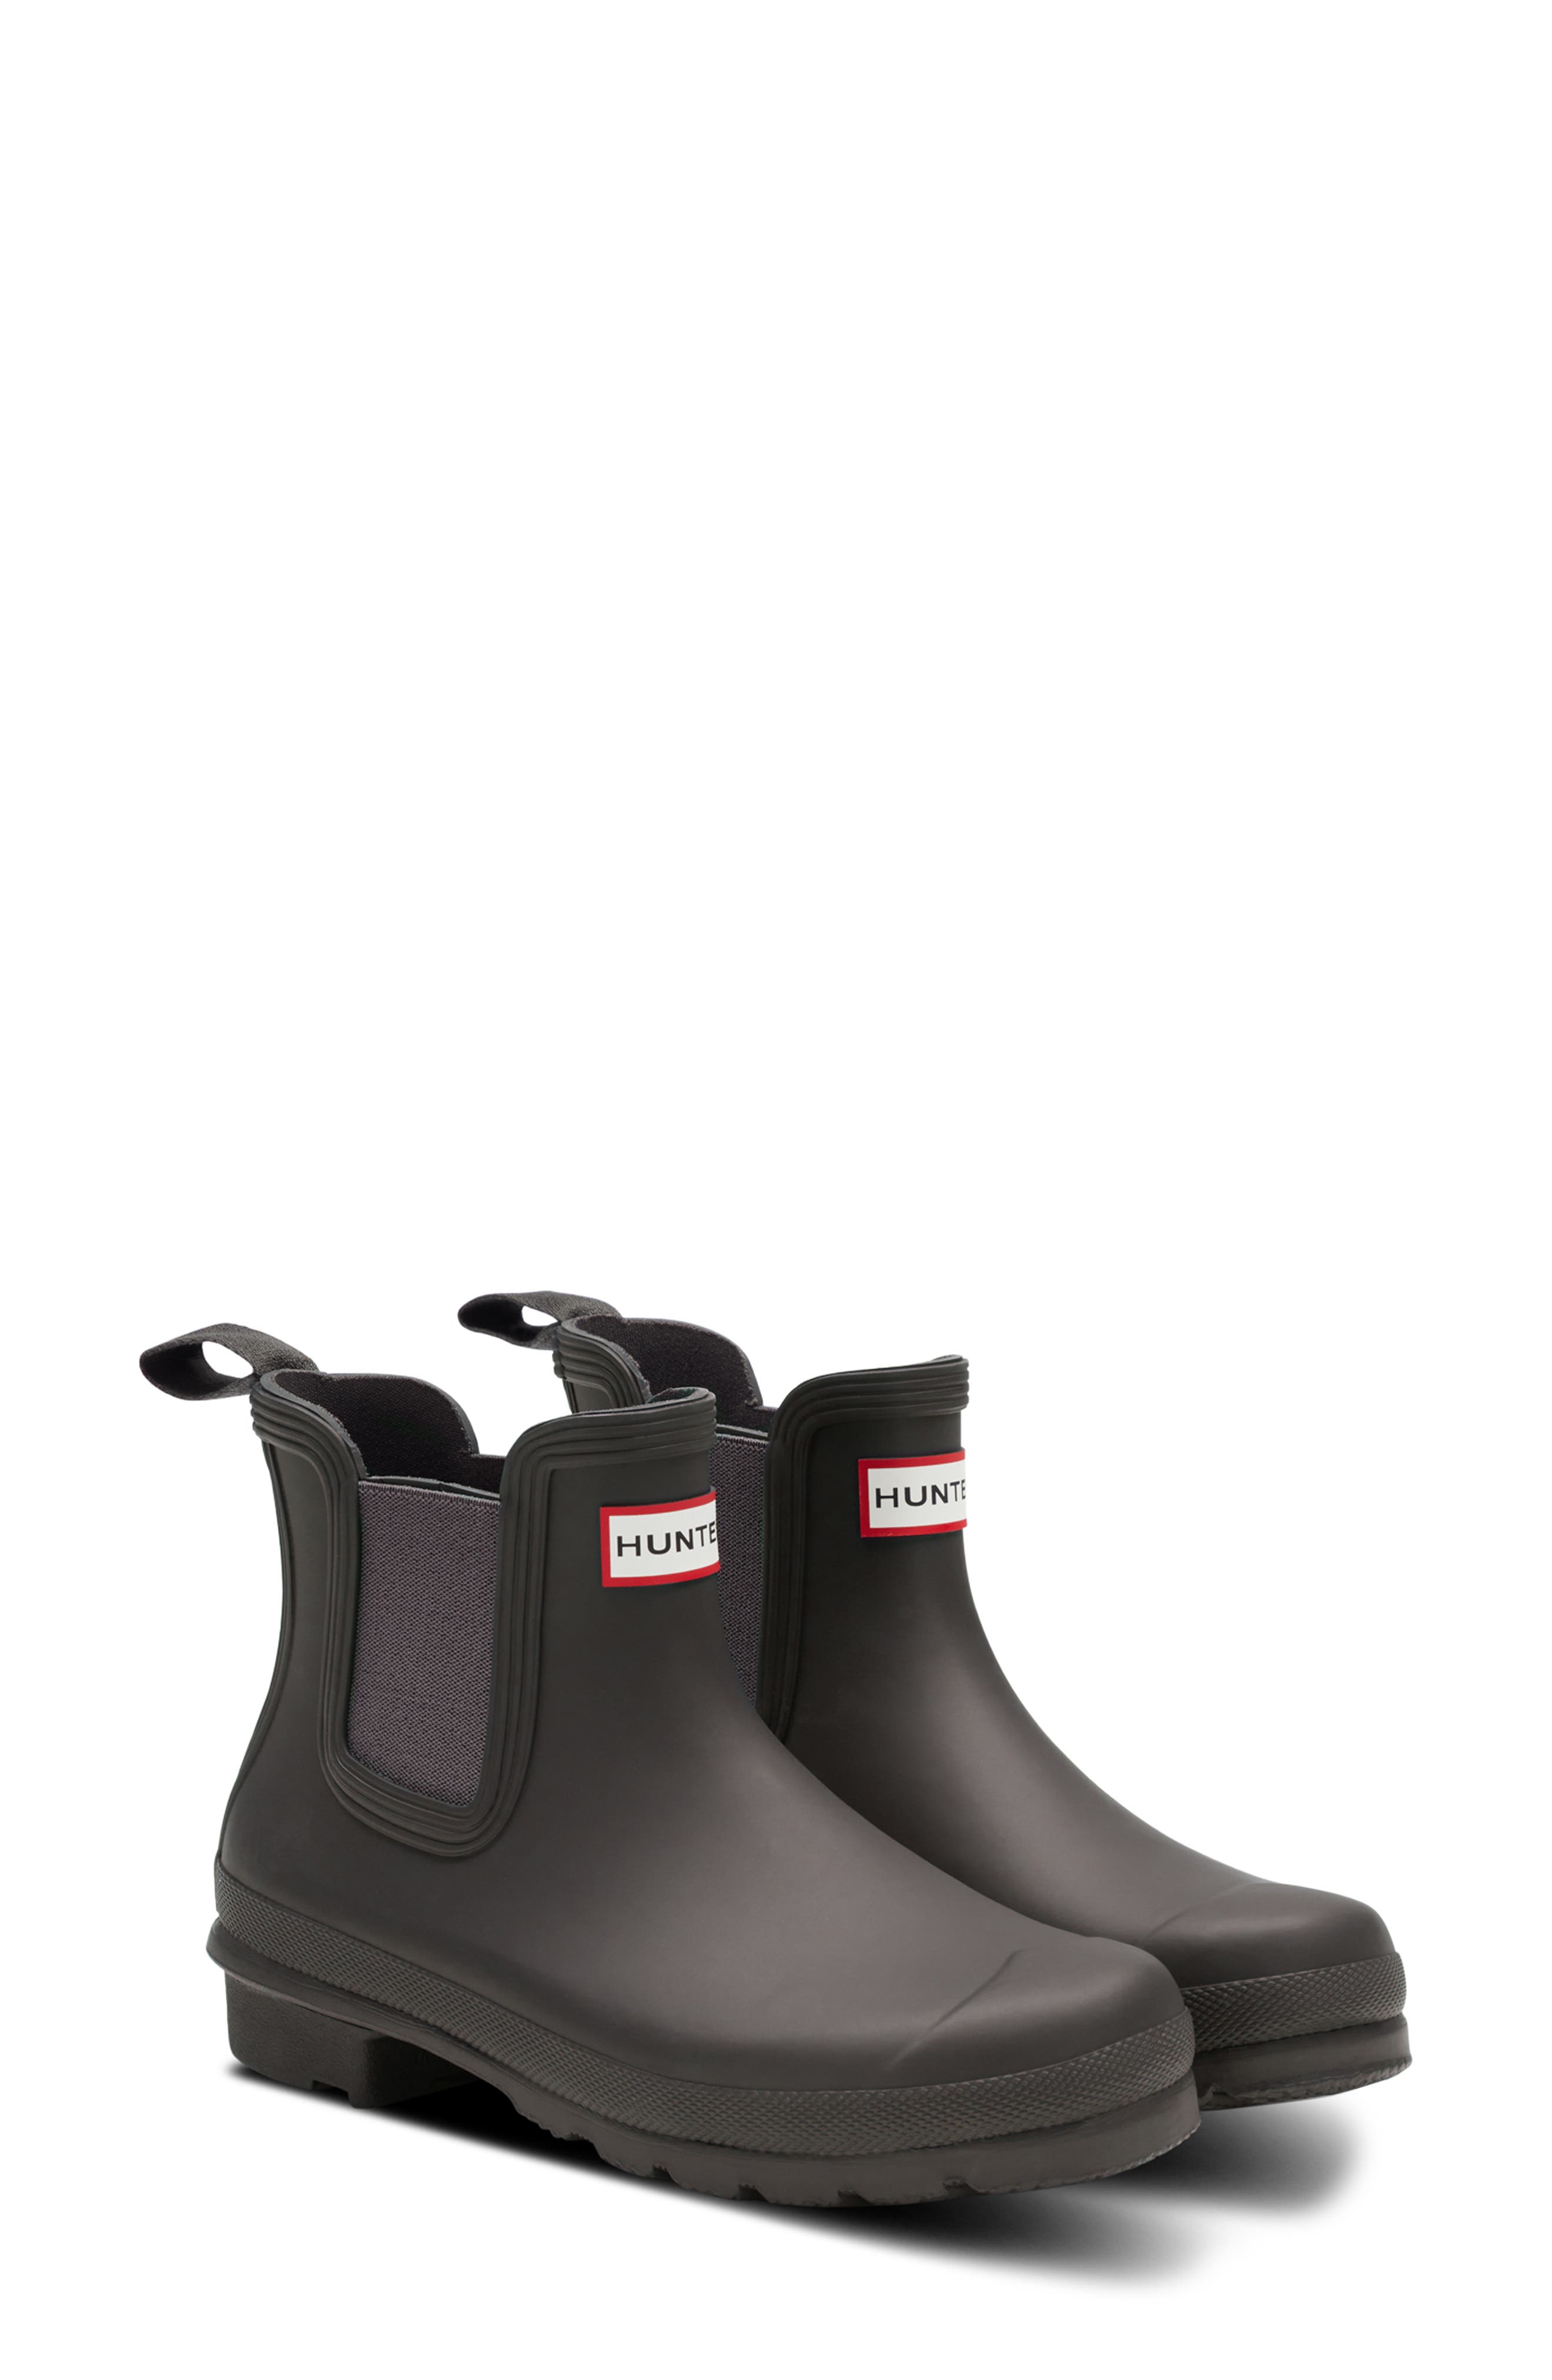 light grey rain boots